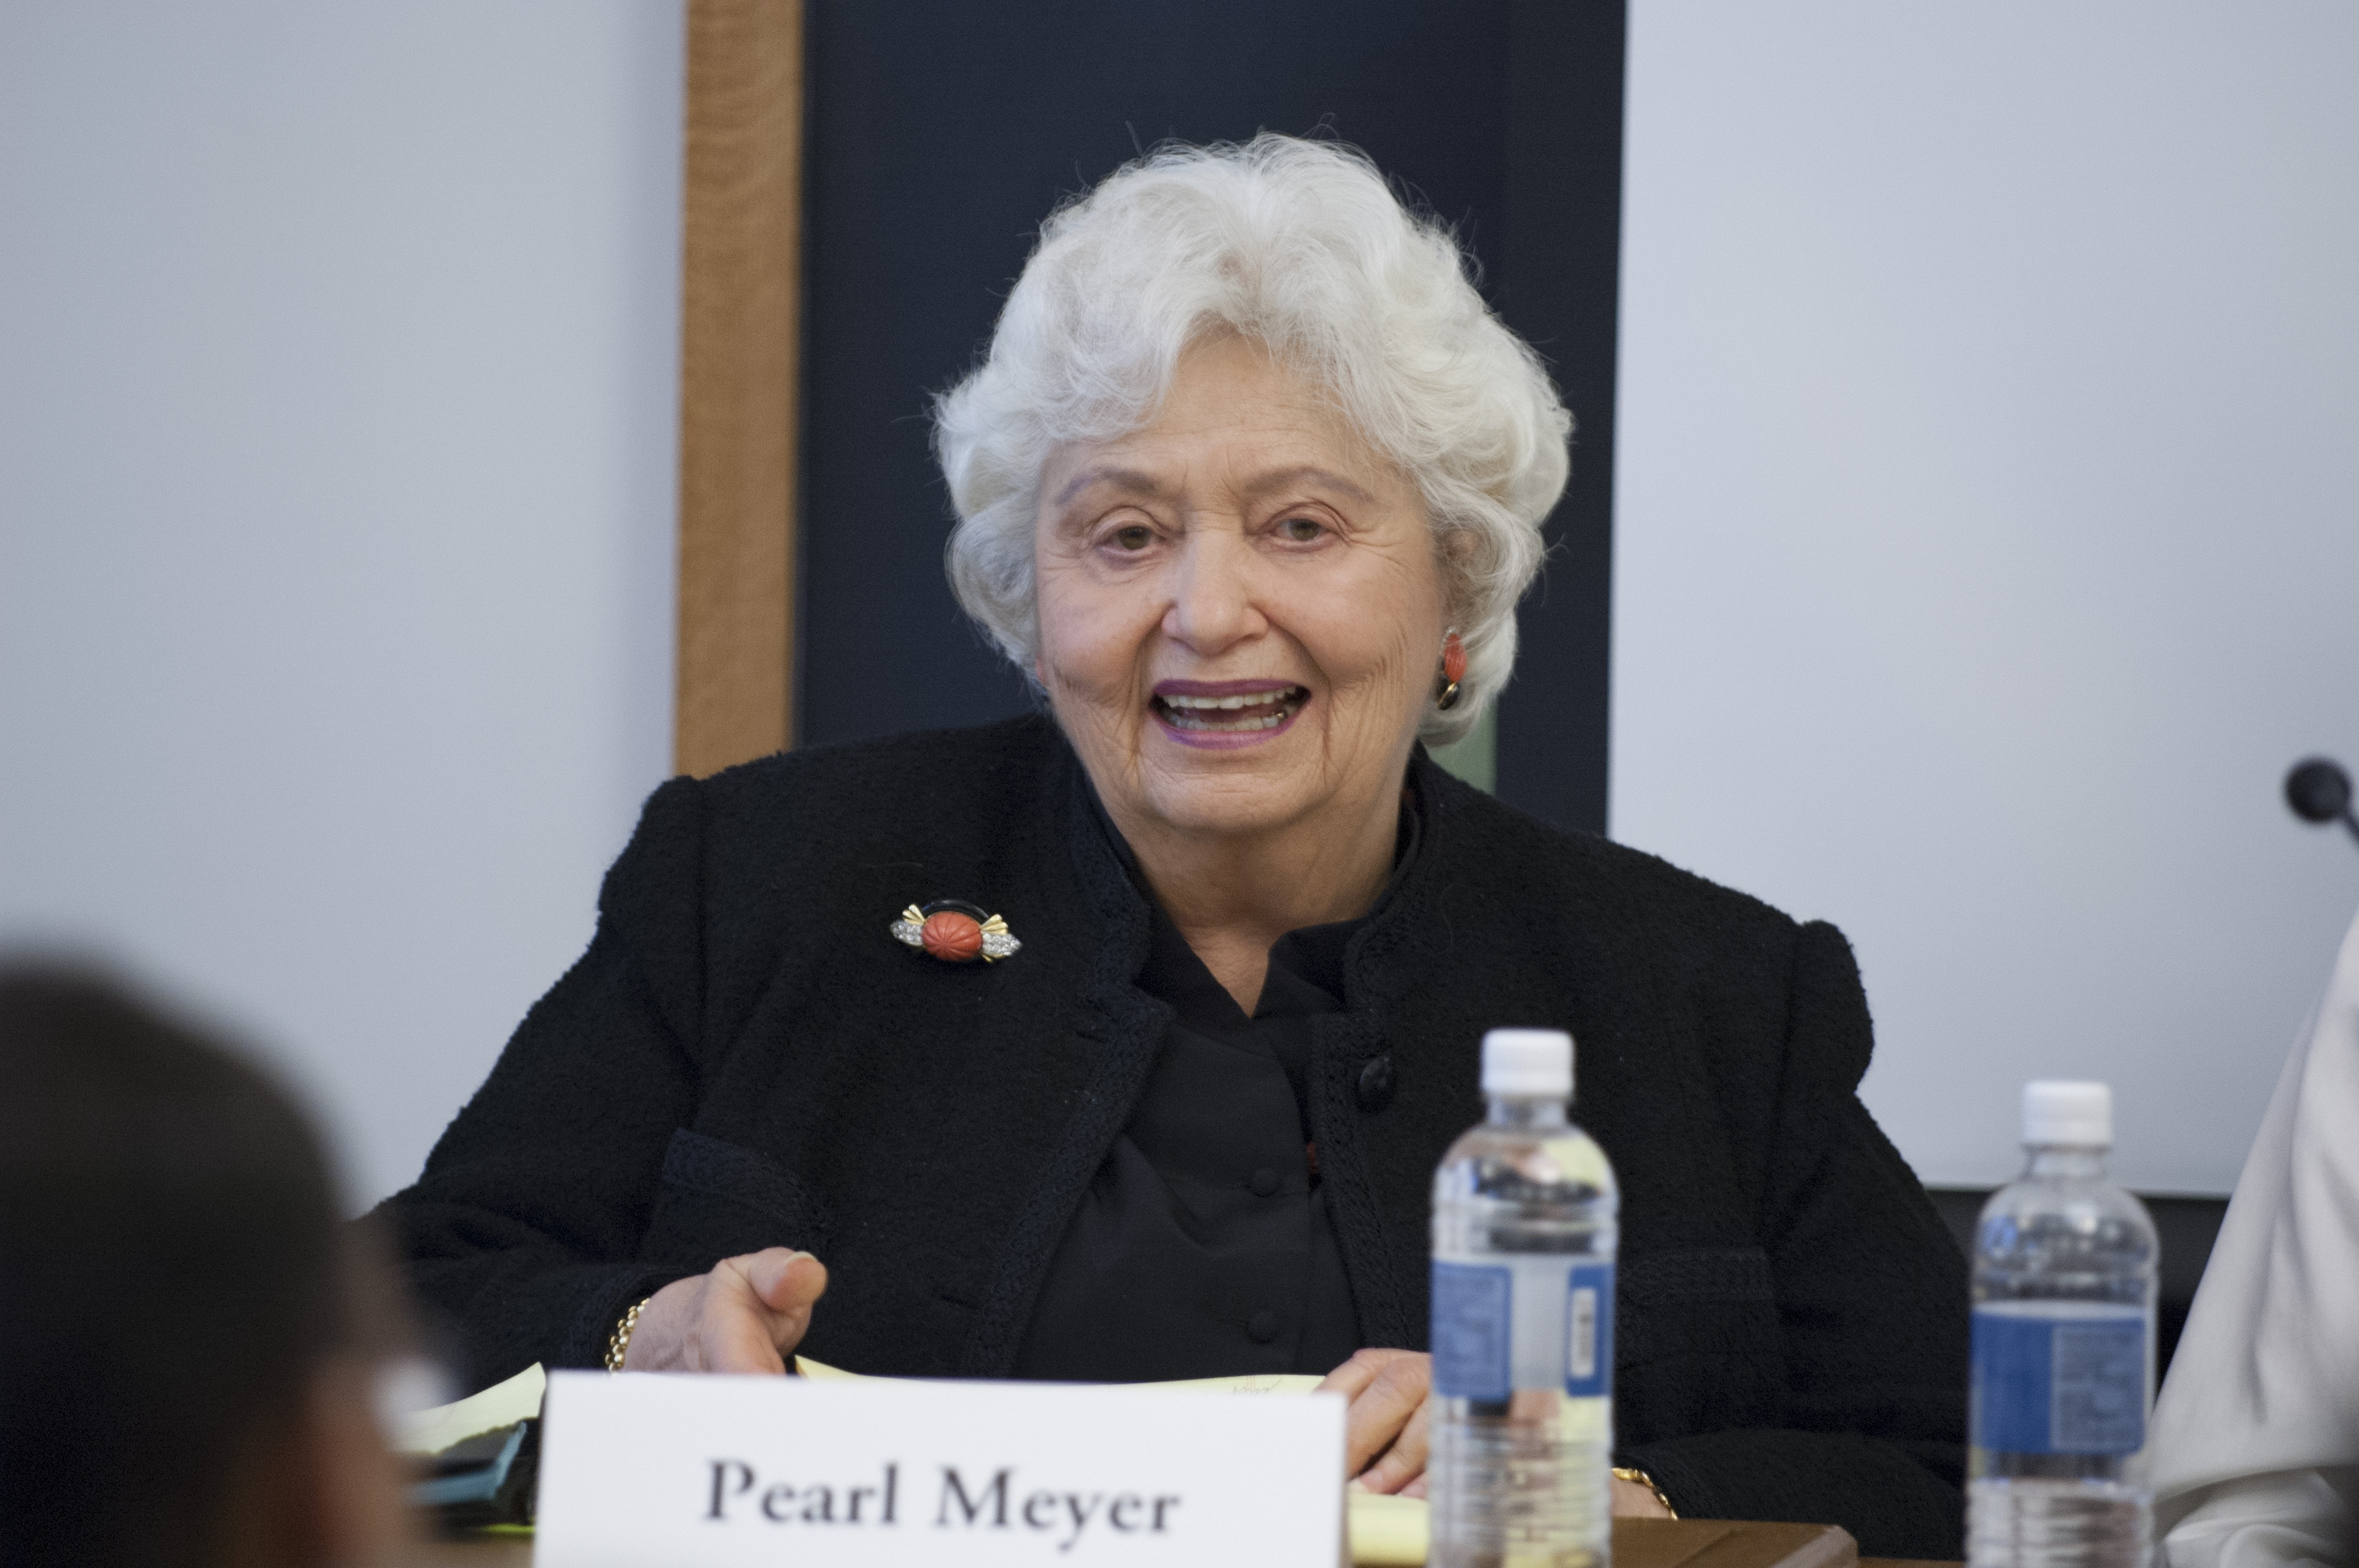 Pearl Meyer